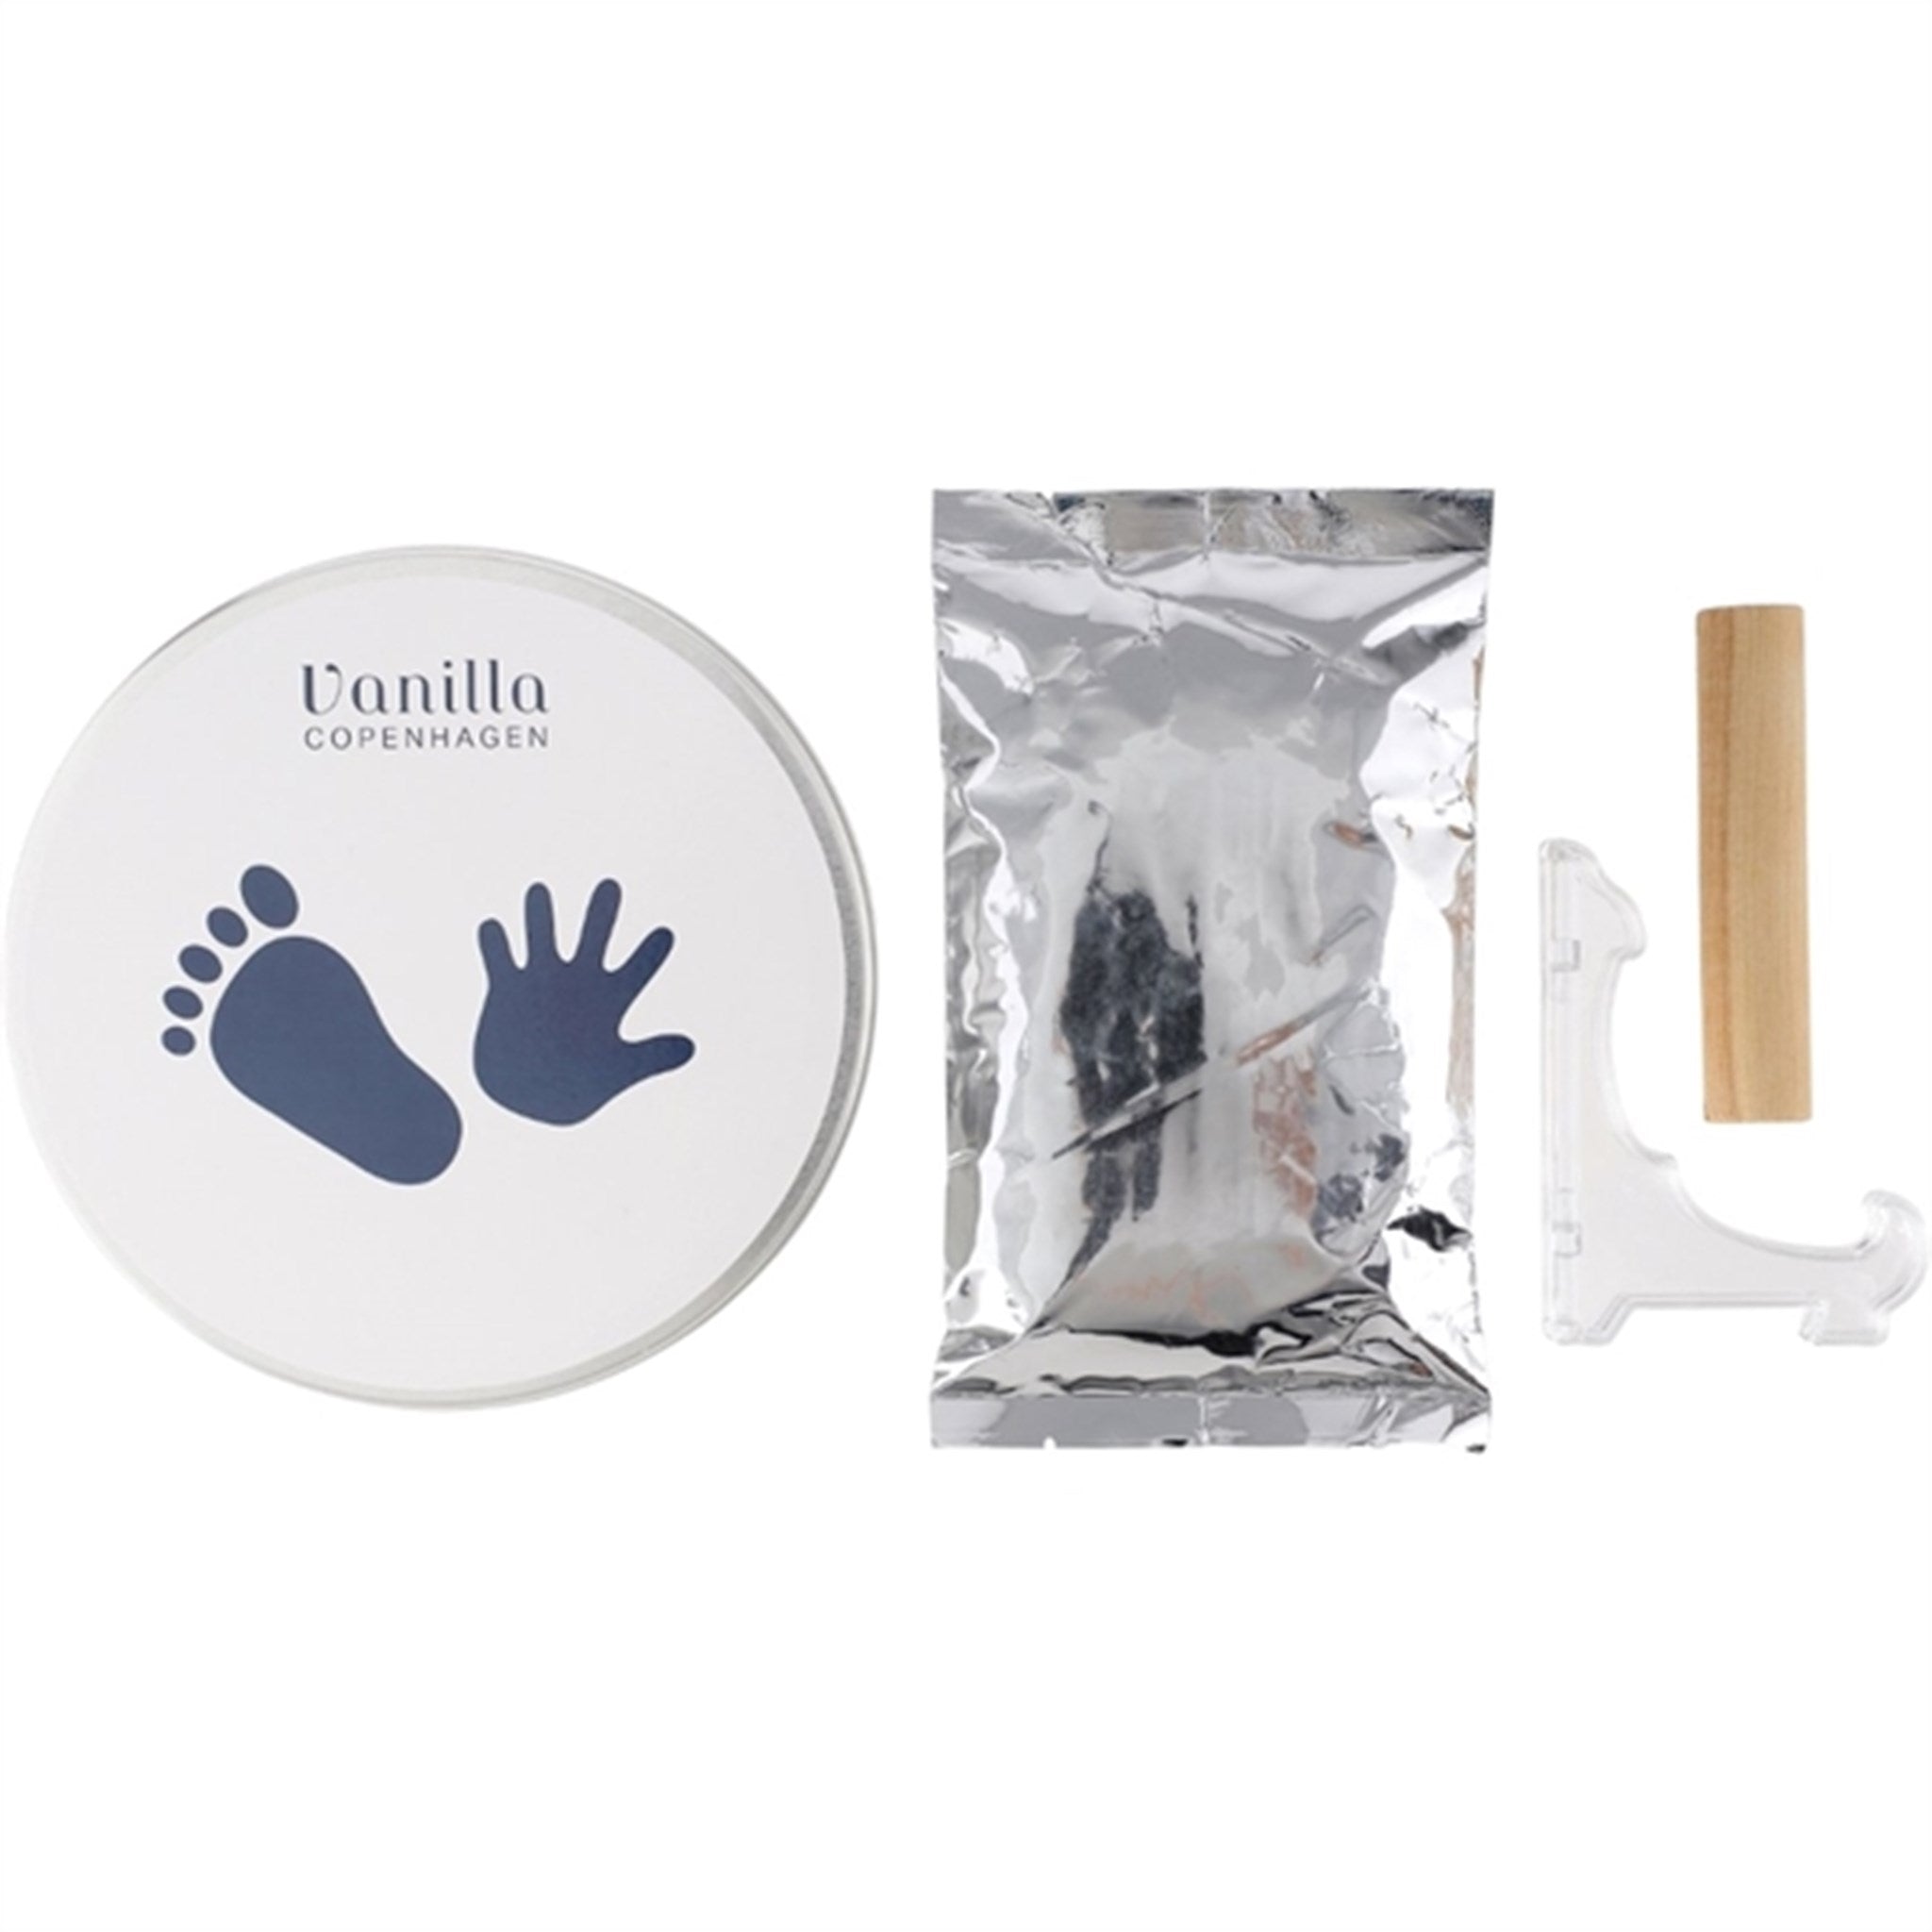 Vanilla COPENHAGEN Hand And Footprint Box 2